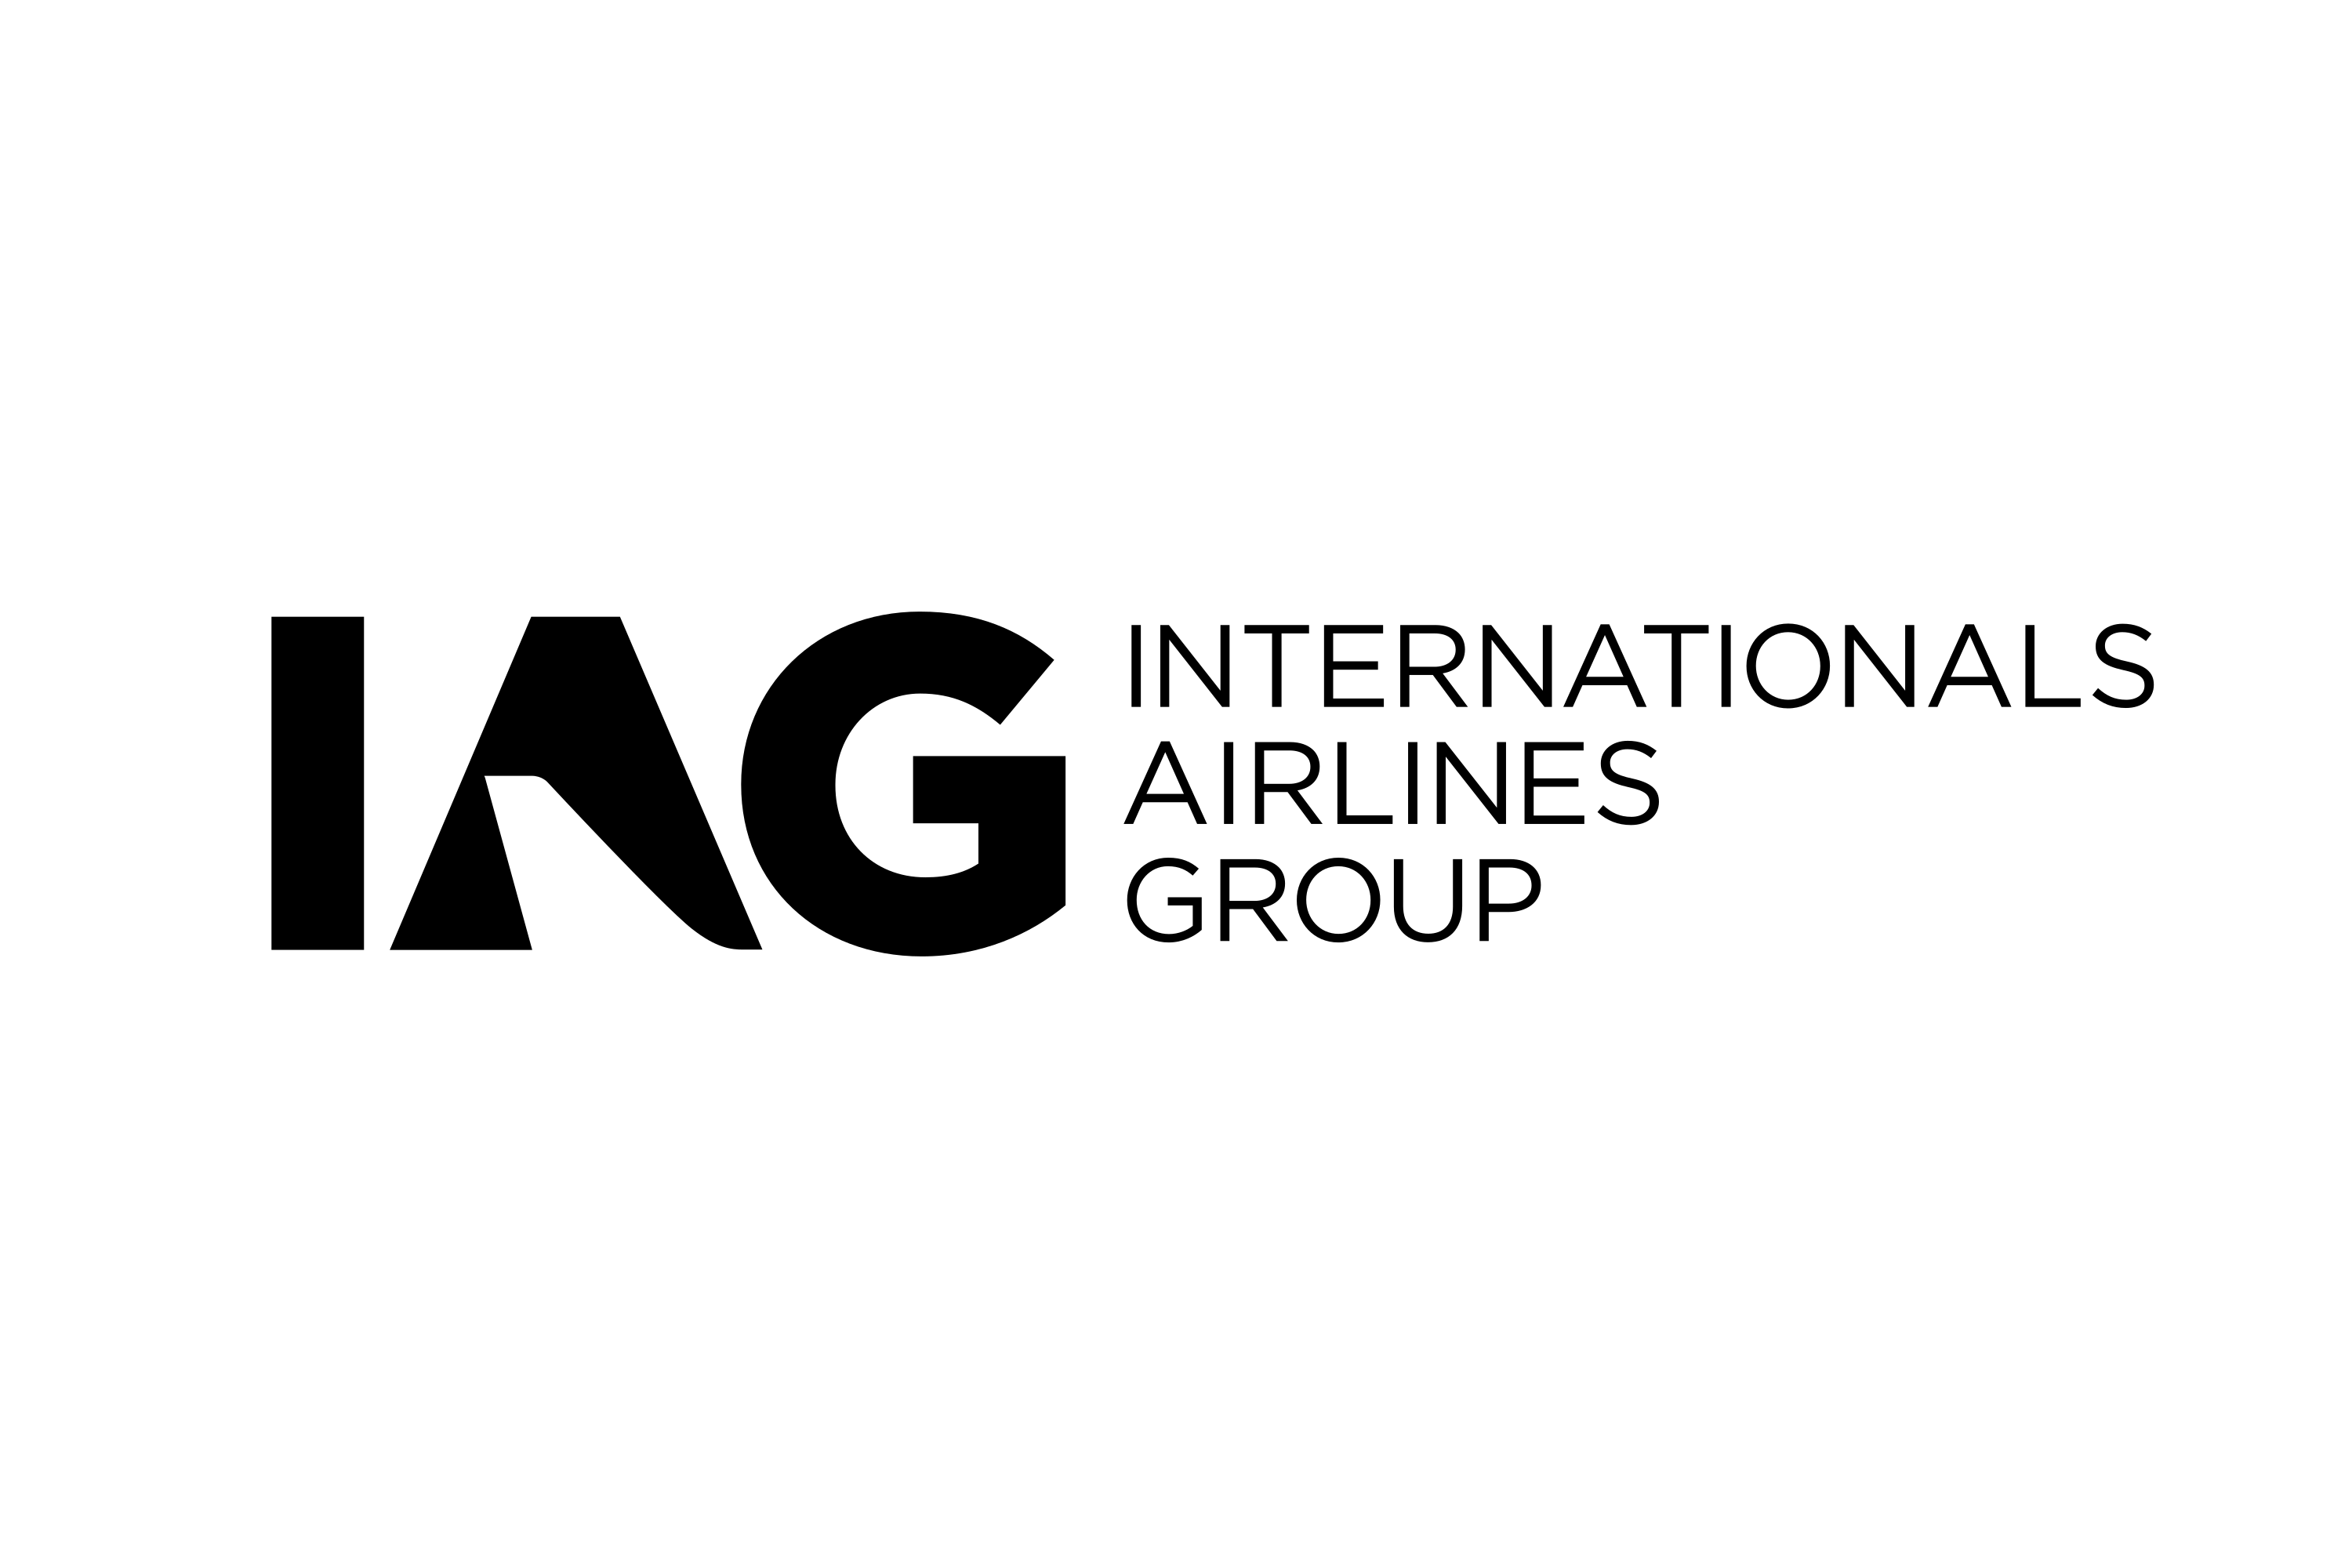 Download International Airlines Group Iag International Consolidated Airlines Group S A Logo In Svg Vector Or Png File Format Logo Wine